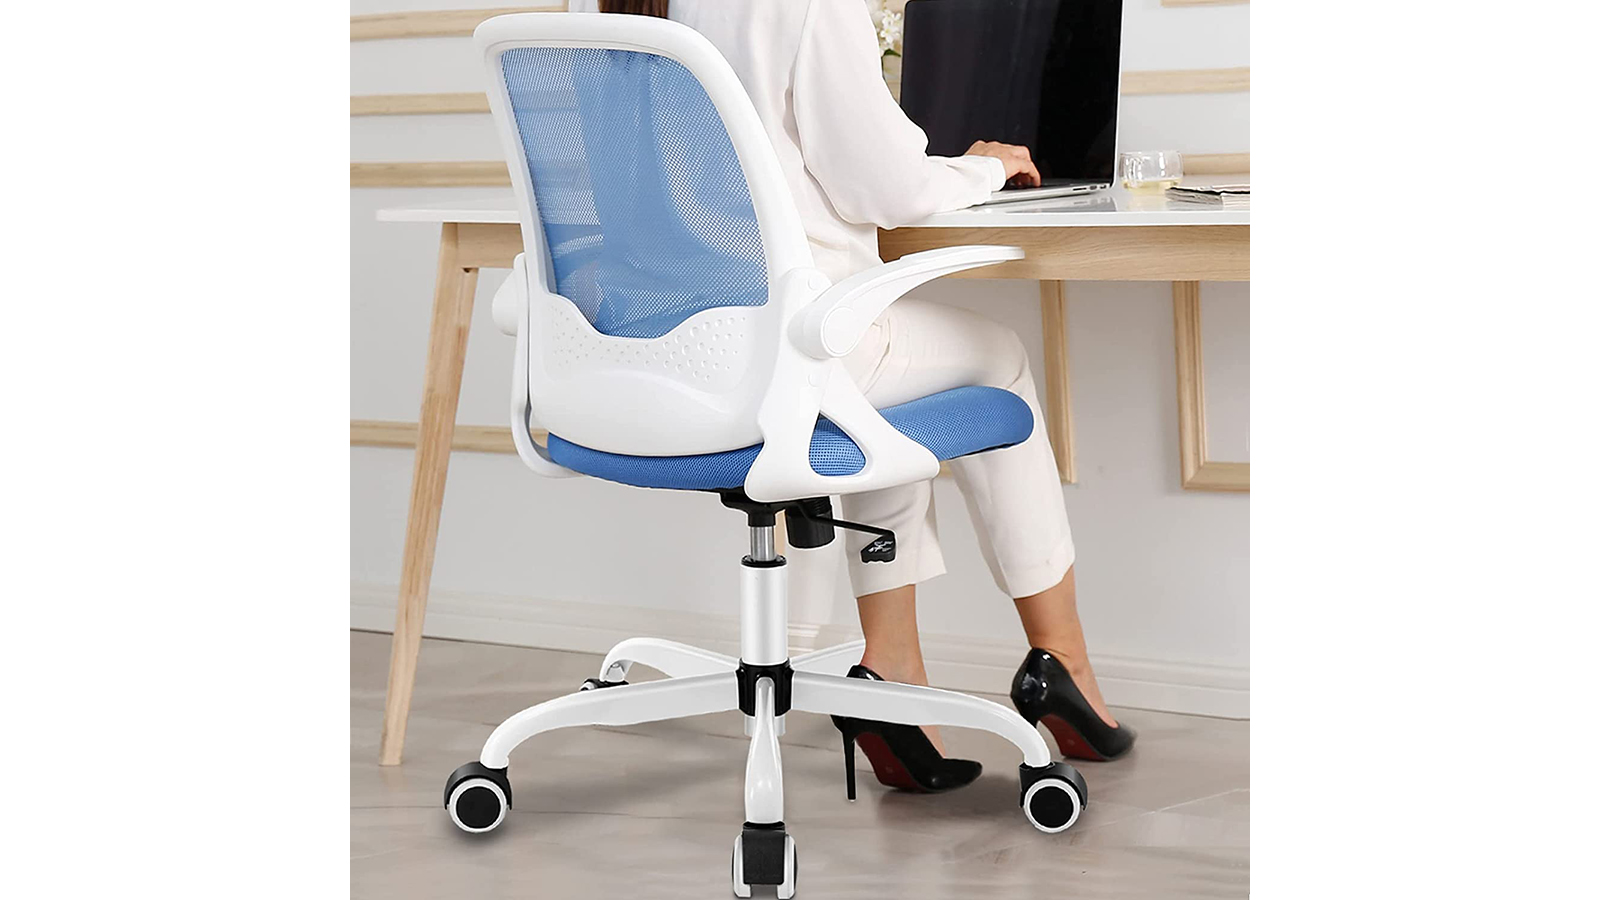 KERDOM Comfy Swivel Task Chair